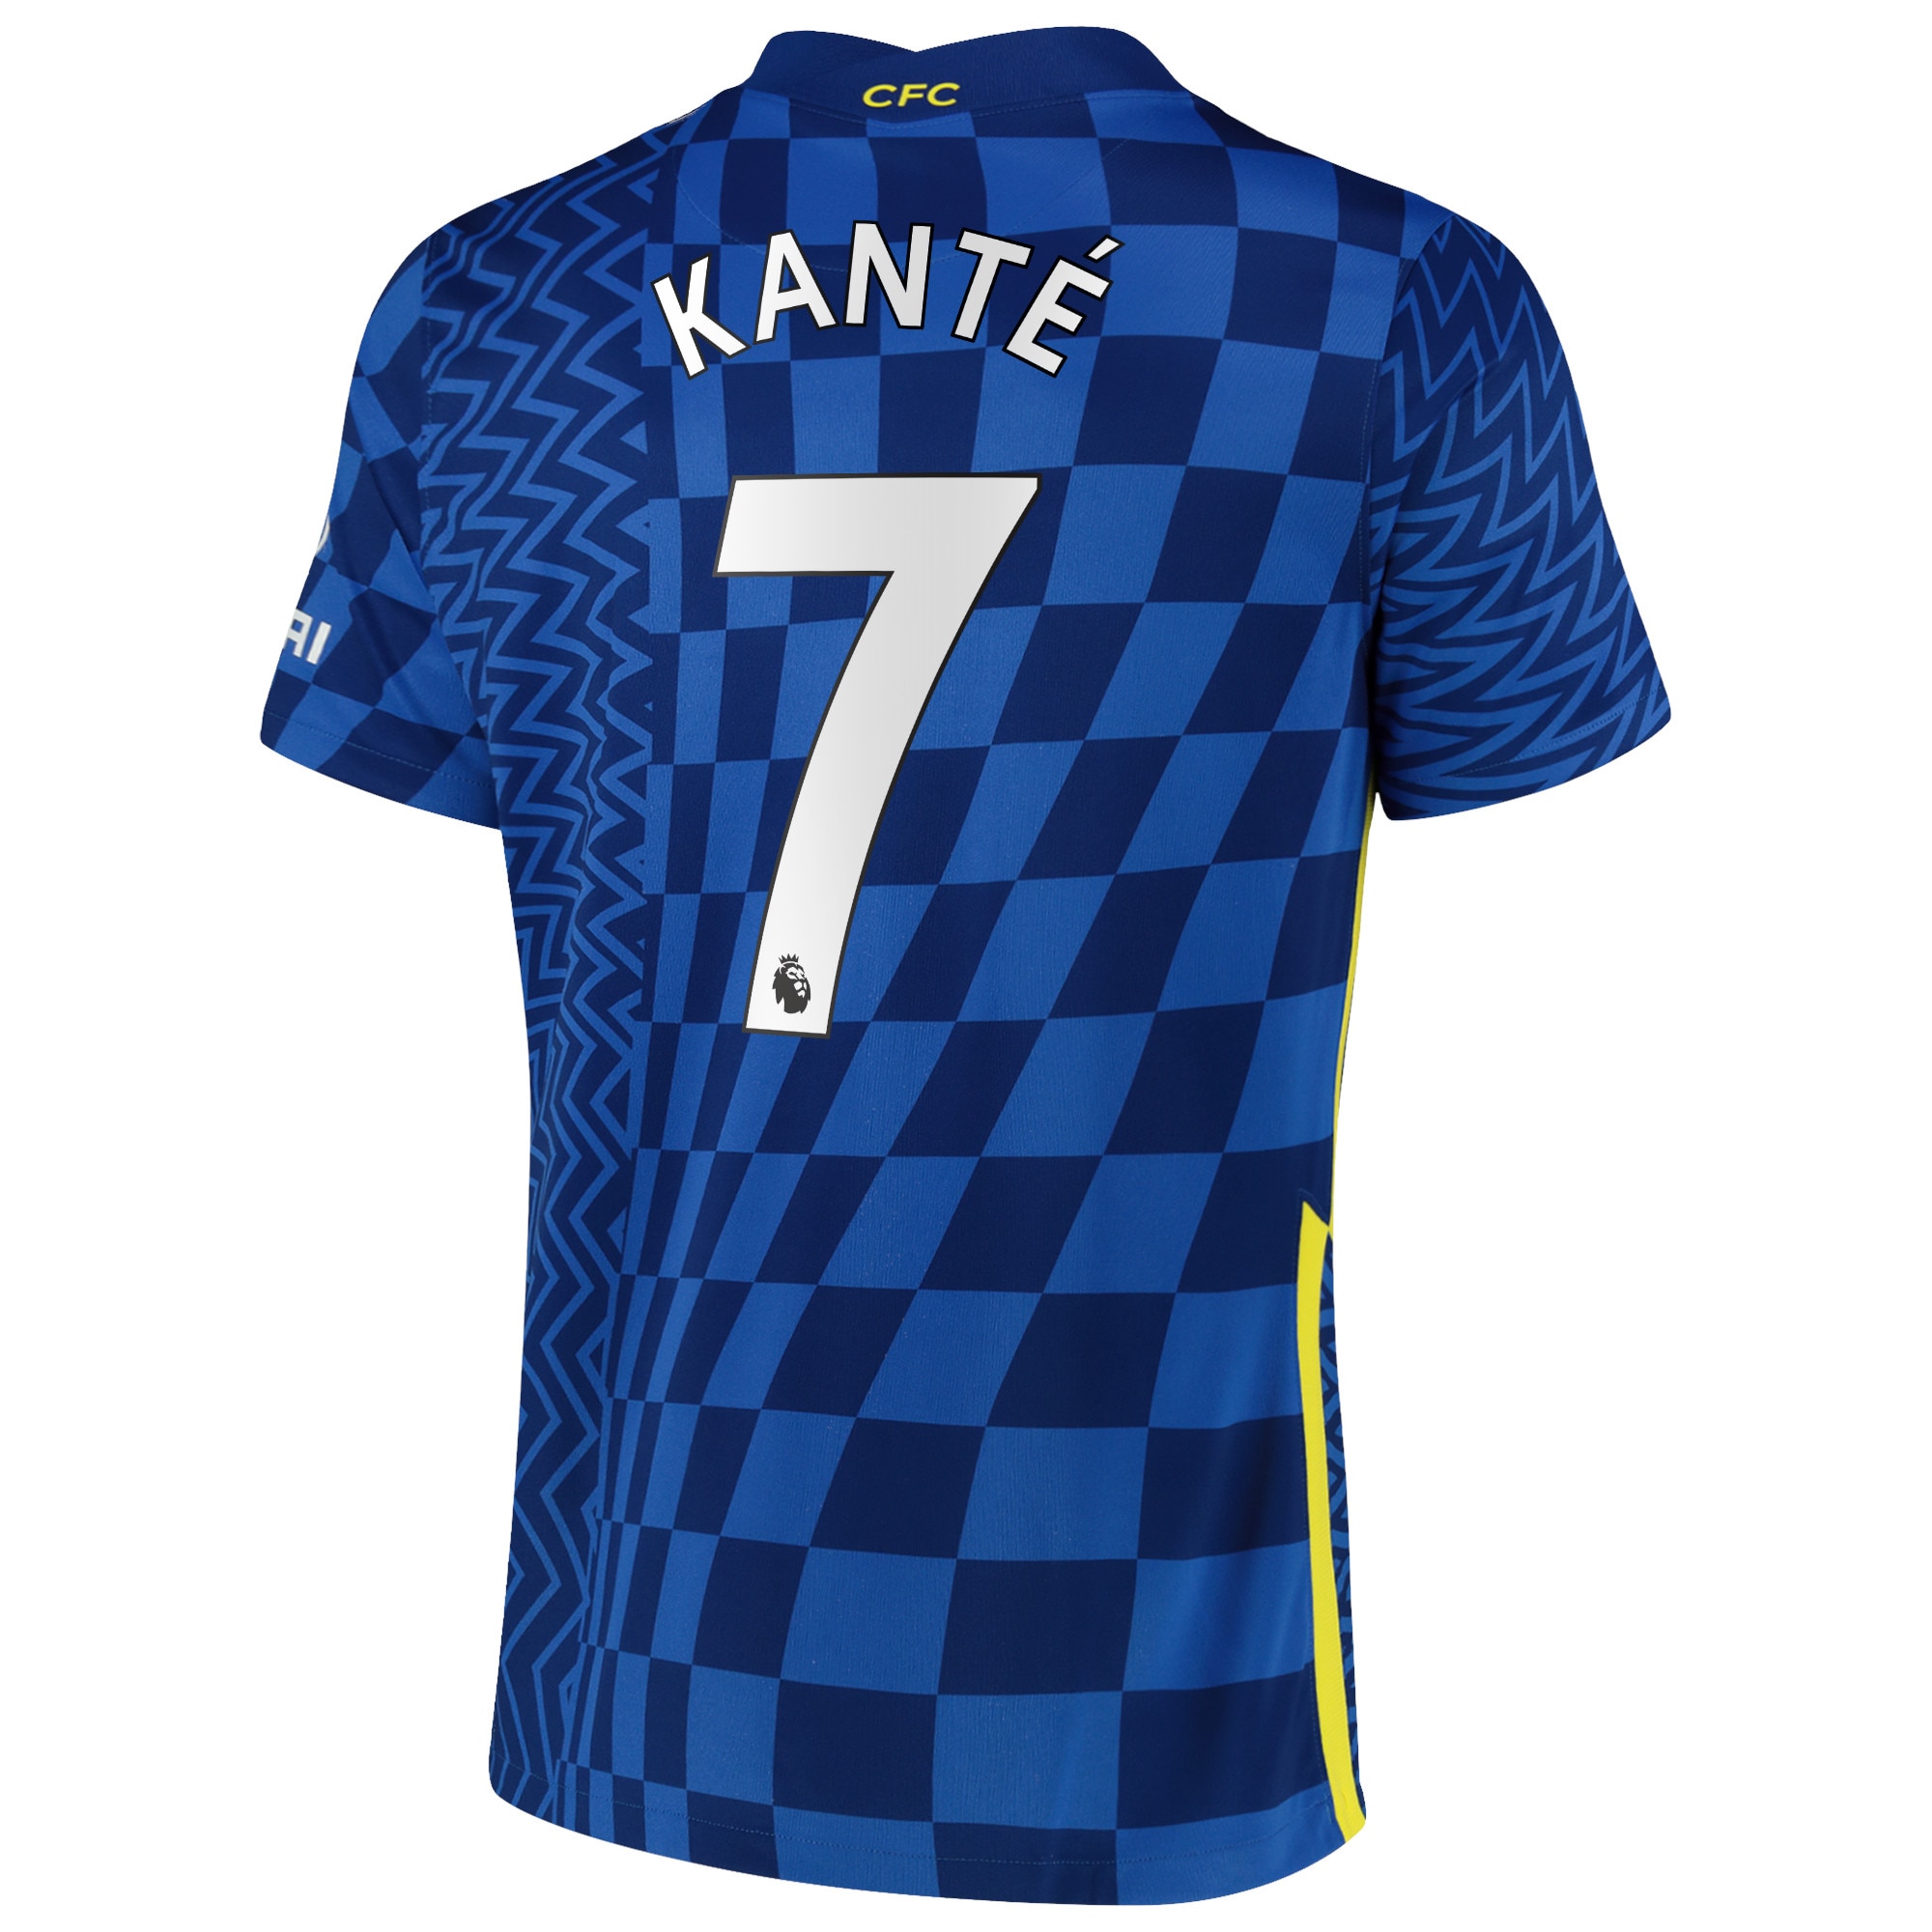 Chelsea Home Stadium Shirt 2021-22 with Kanté 7 printing